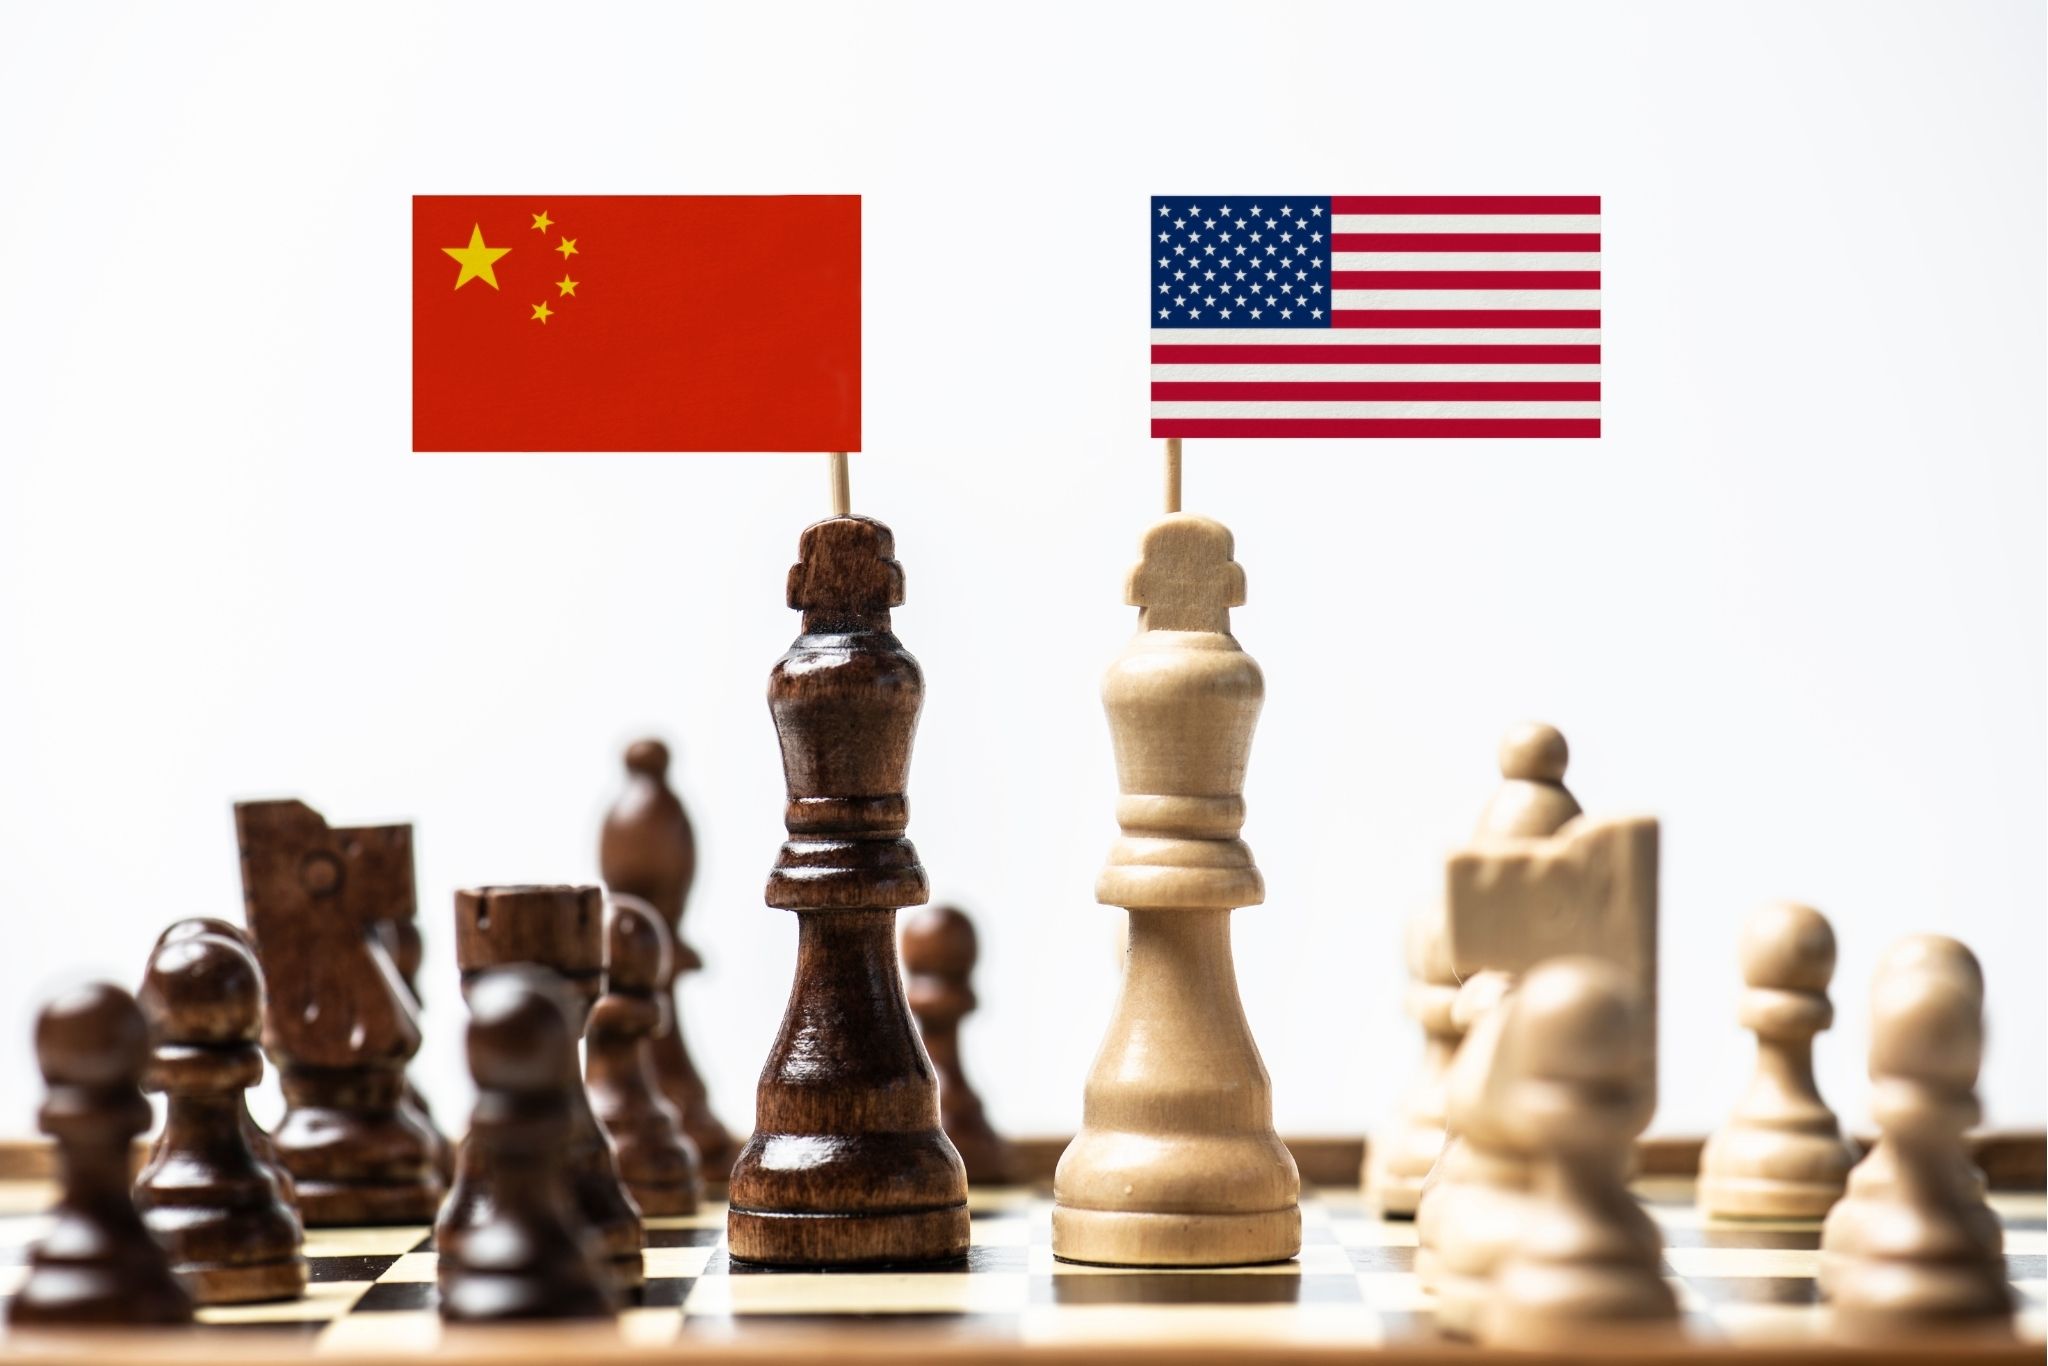 USA VS CHINA